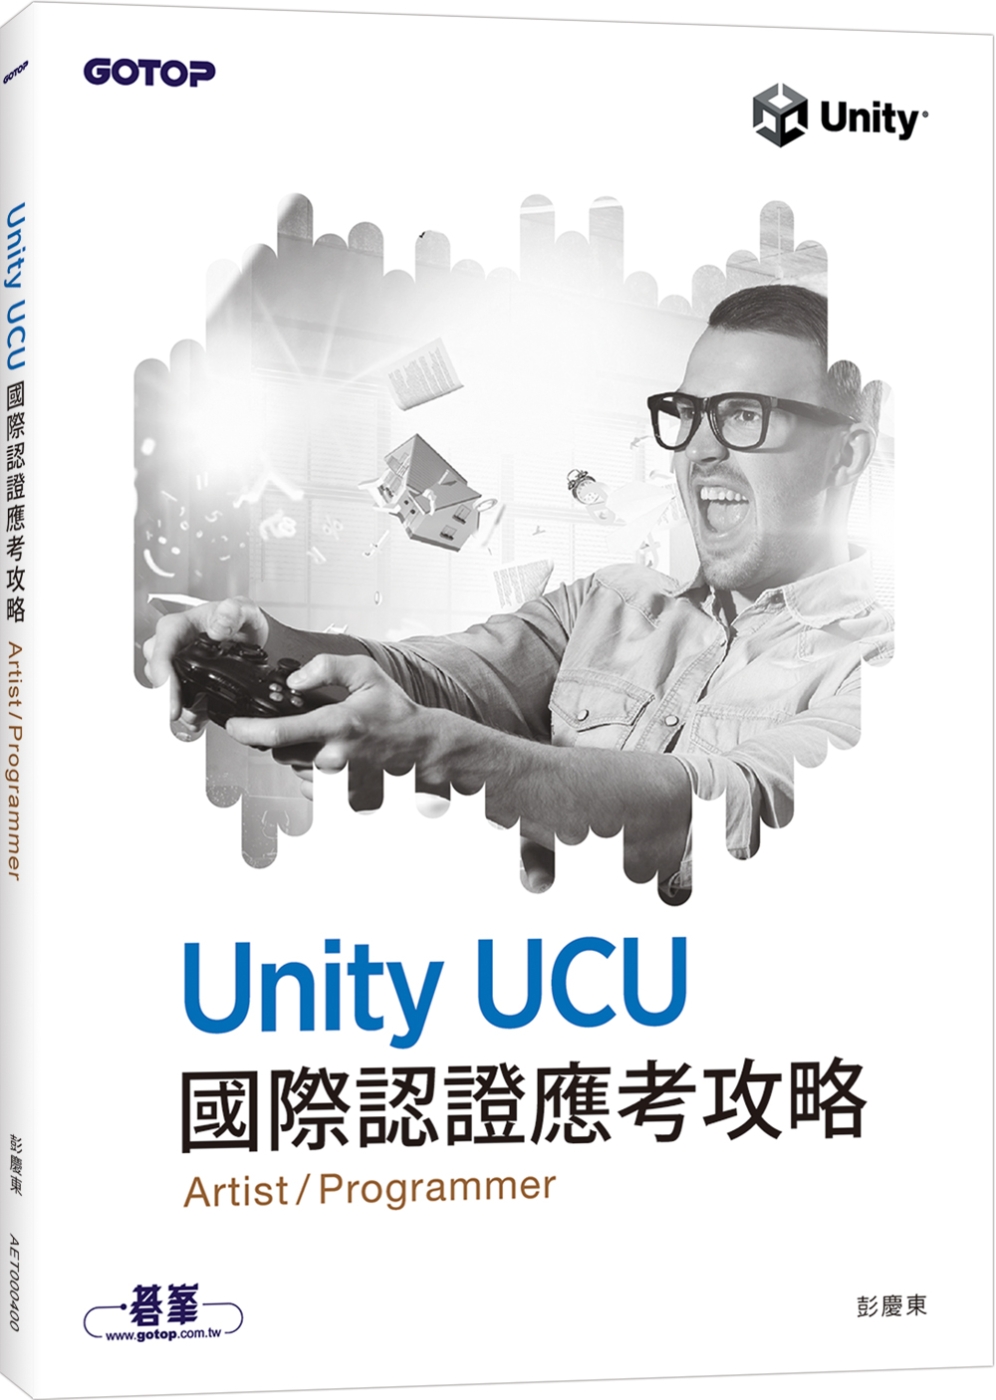 Unity UCU 國際認證應考攻略 (Artist/Pro...